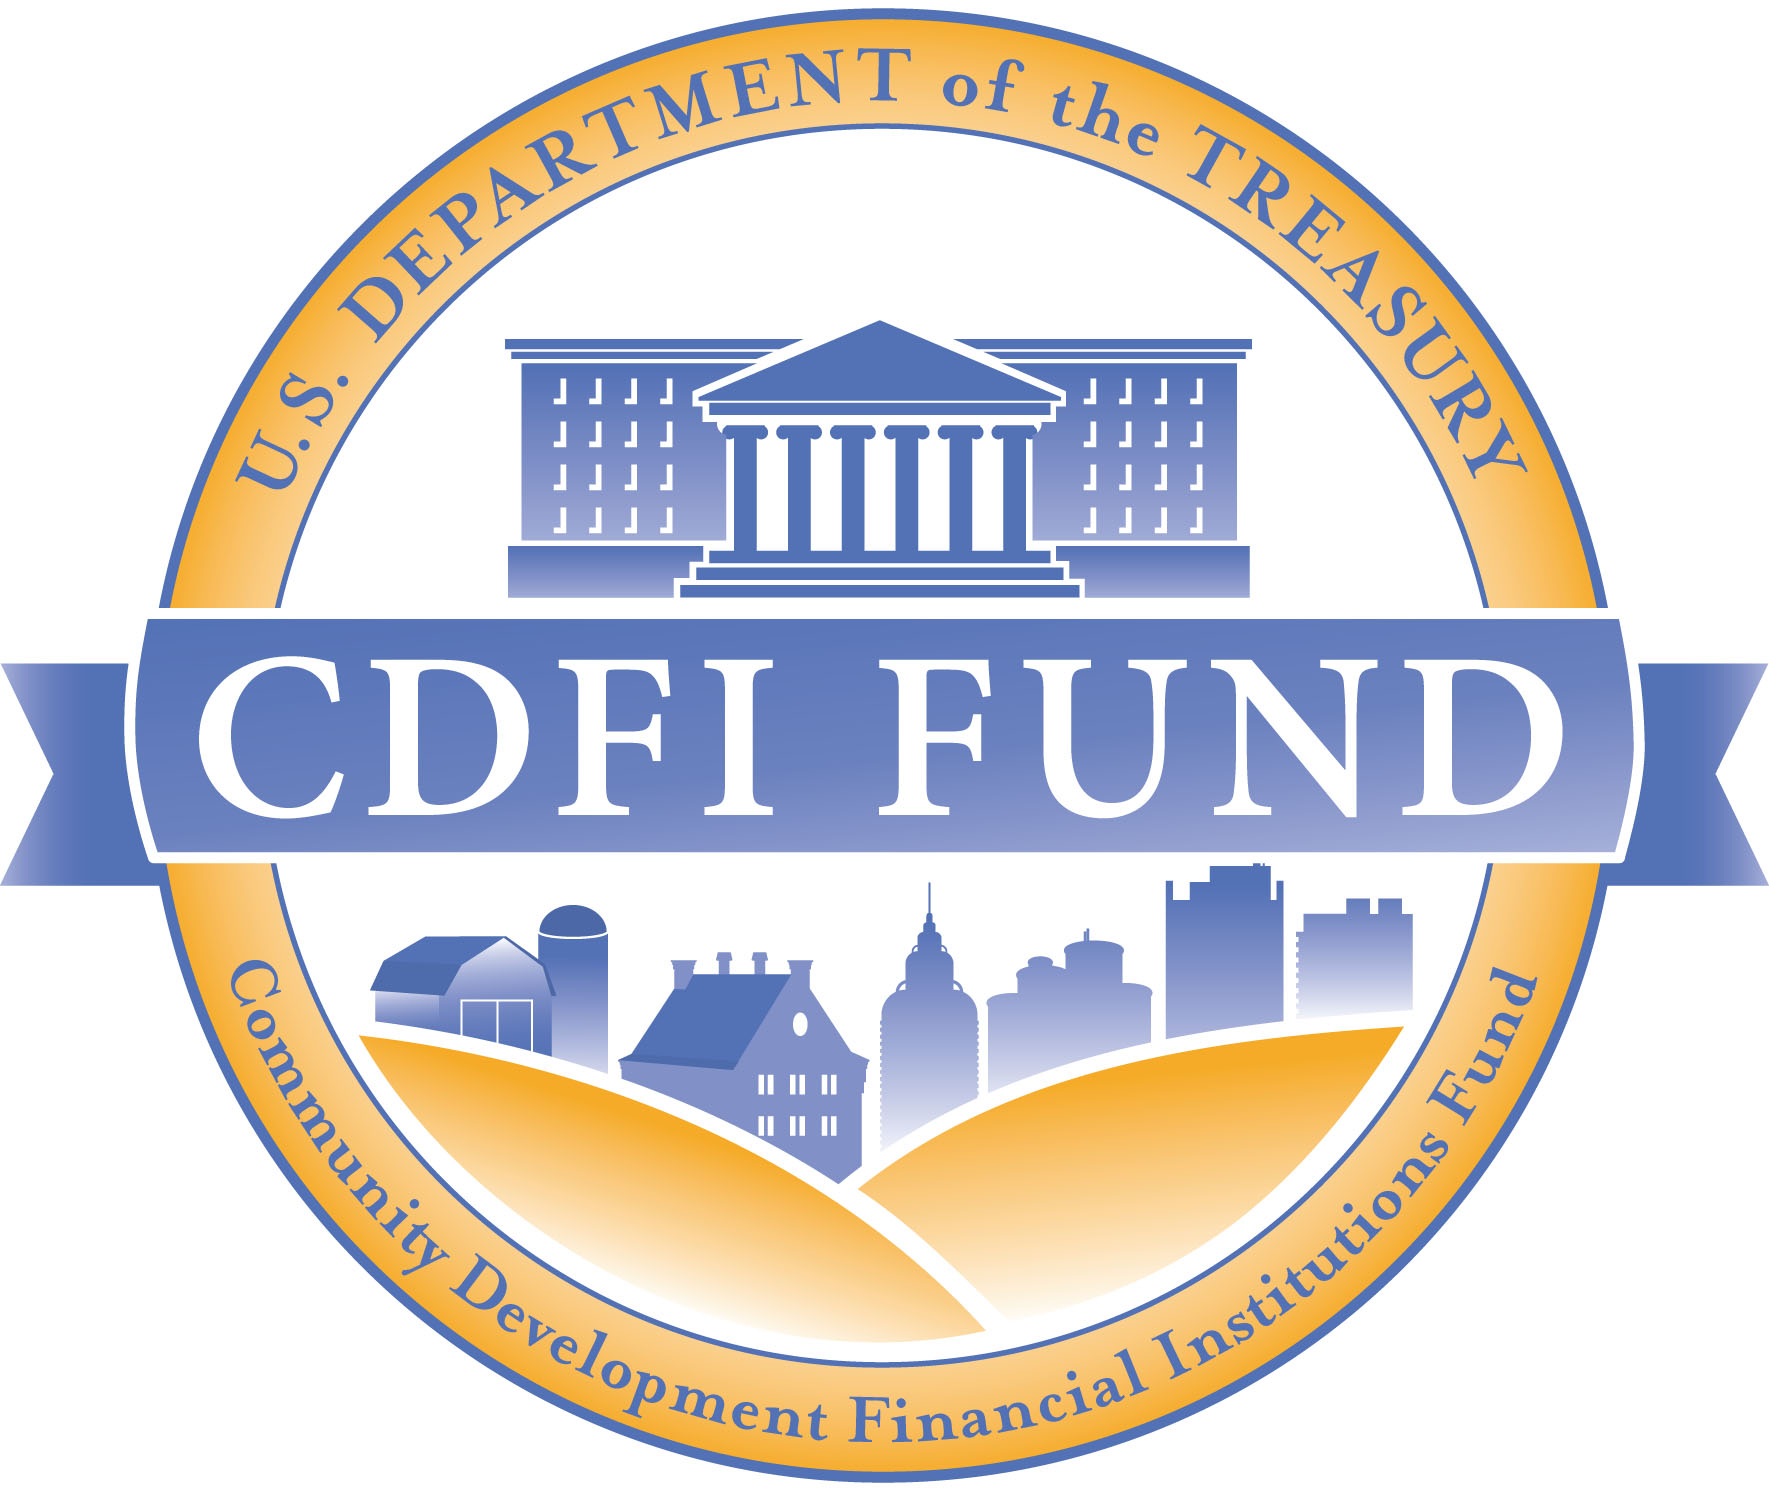 Community Development Financial Institutions Fund